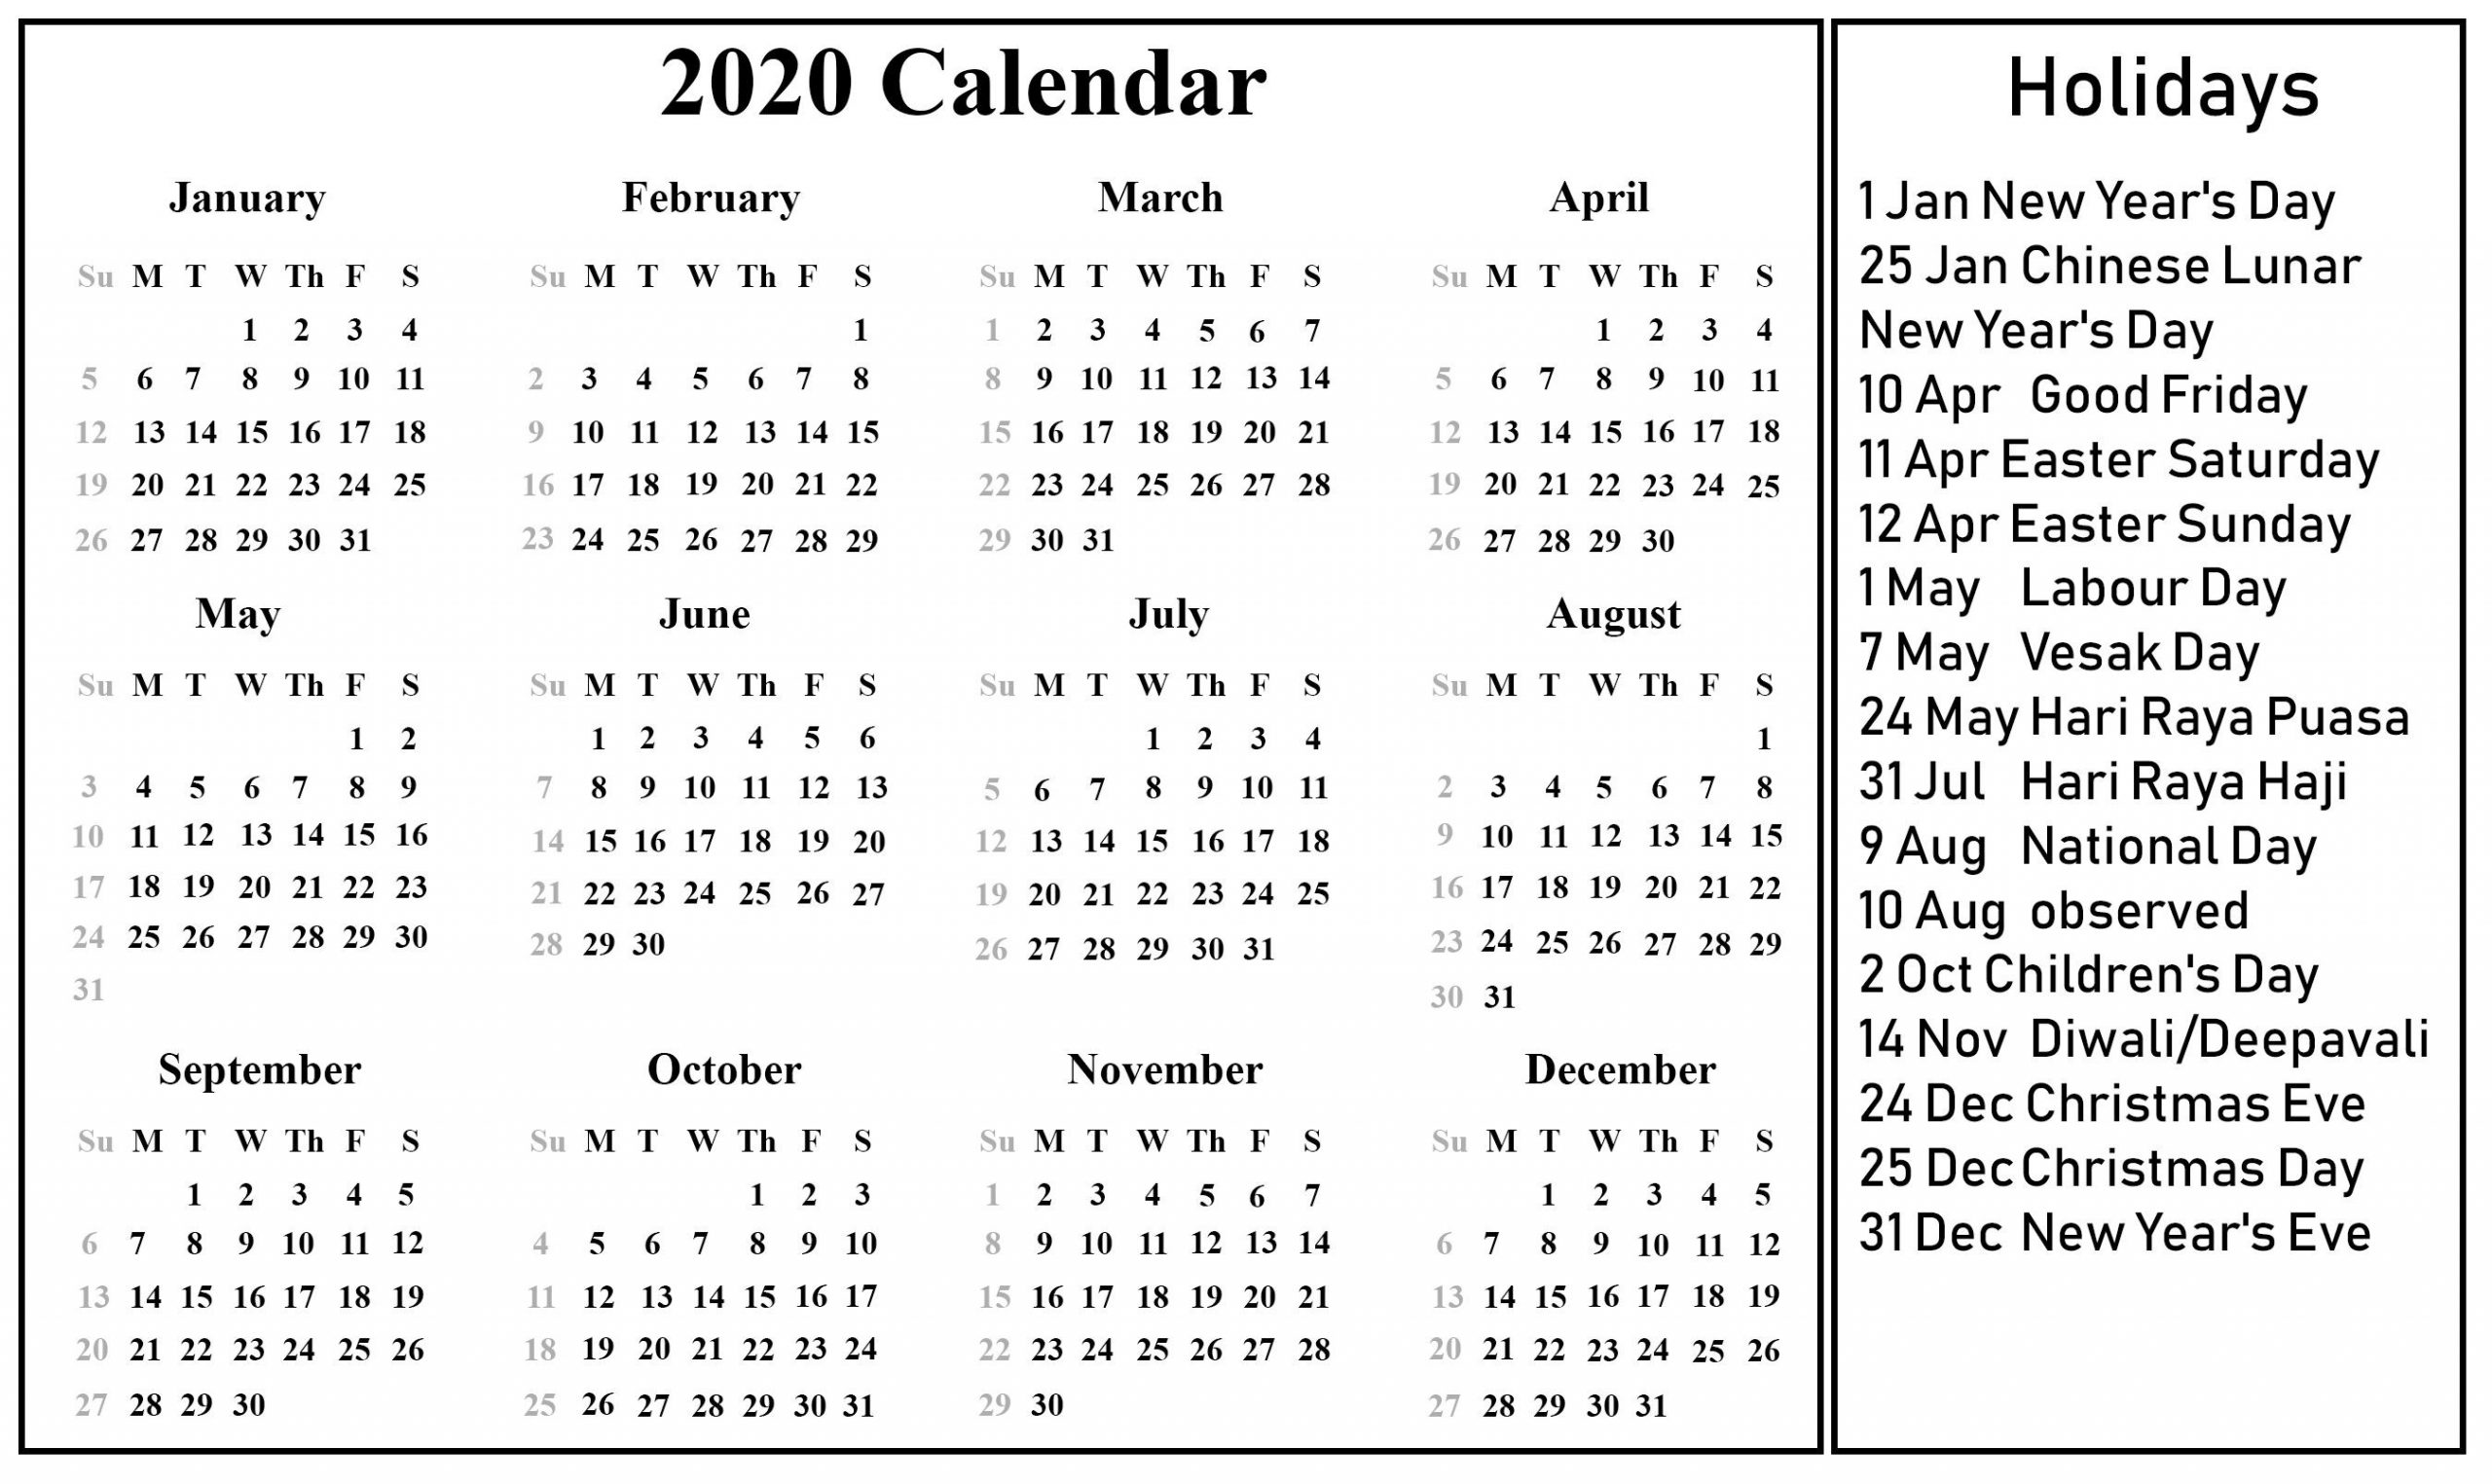 Impressive 2020 Calendar Holidays Sri Lanka | Holiday-Merchantile Holidays 2021 Sri Lanka